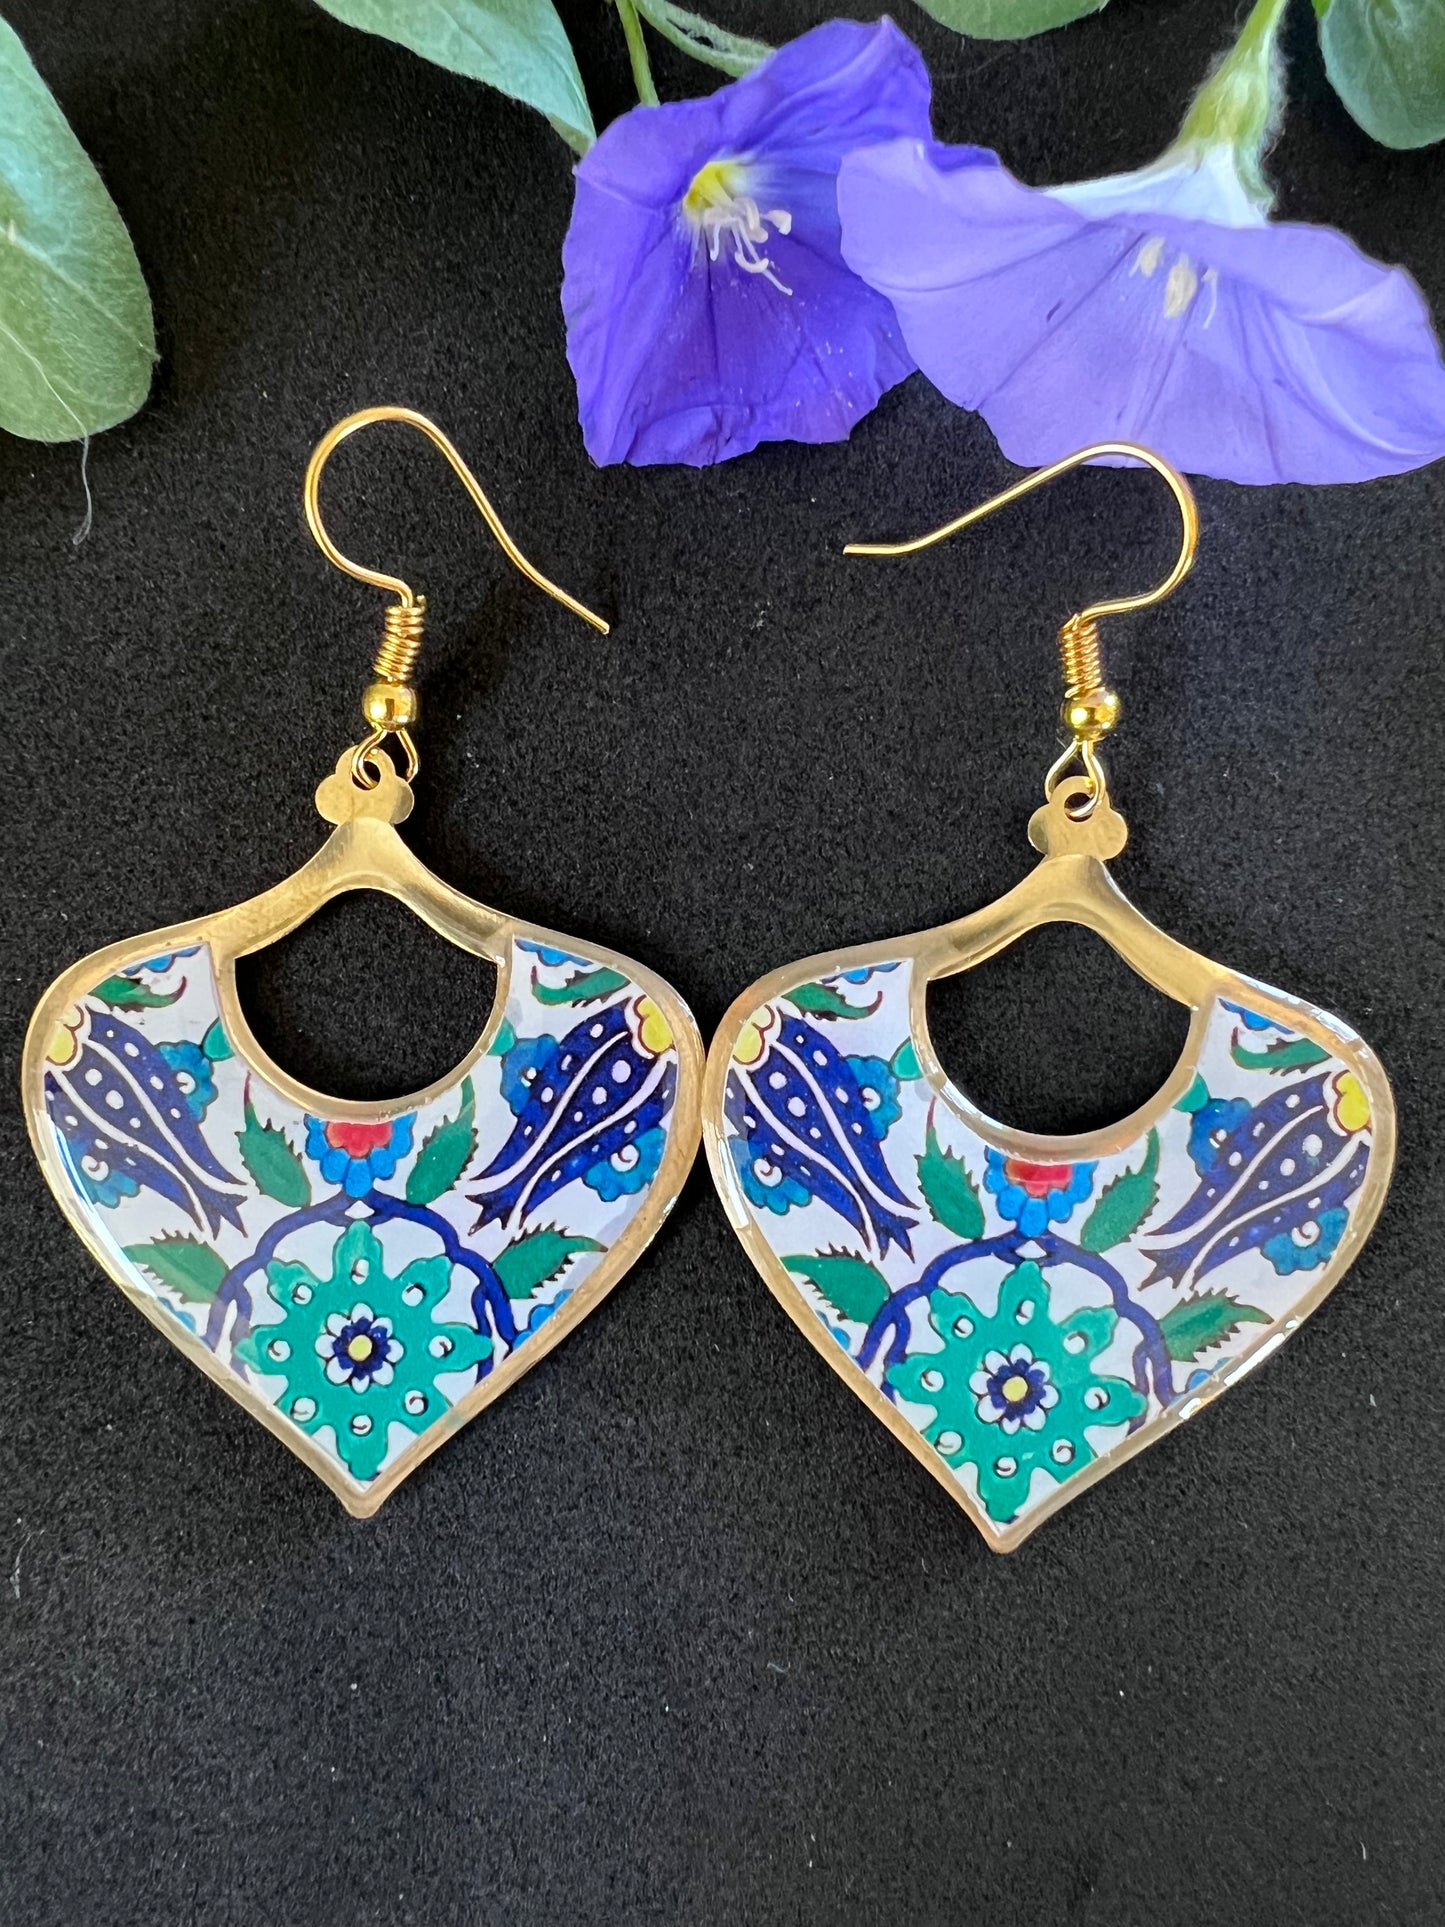 Double Sided Morocan Leaf earrings